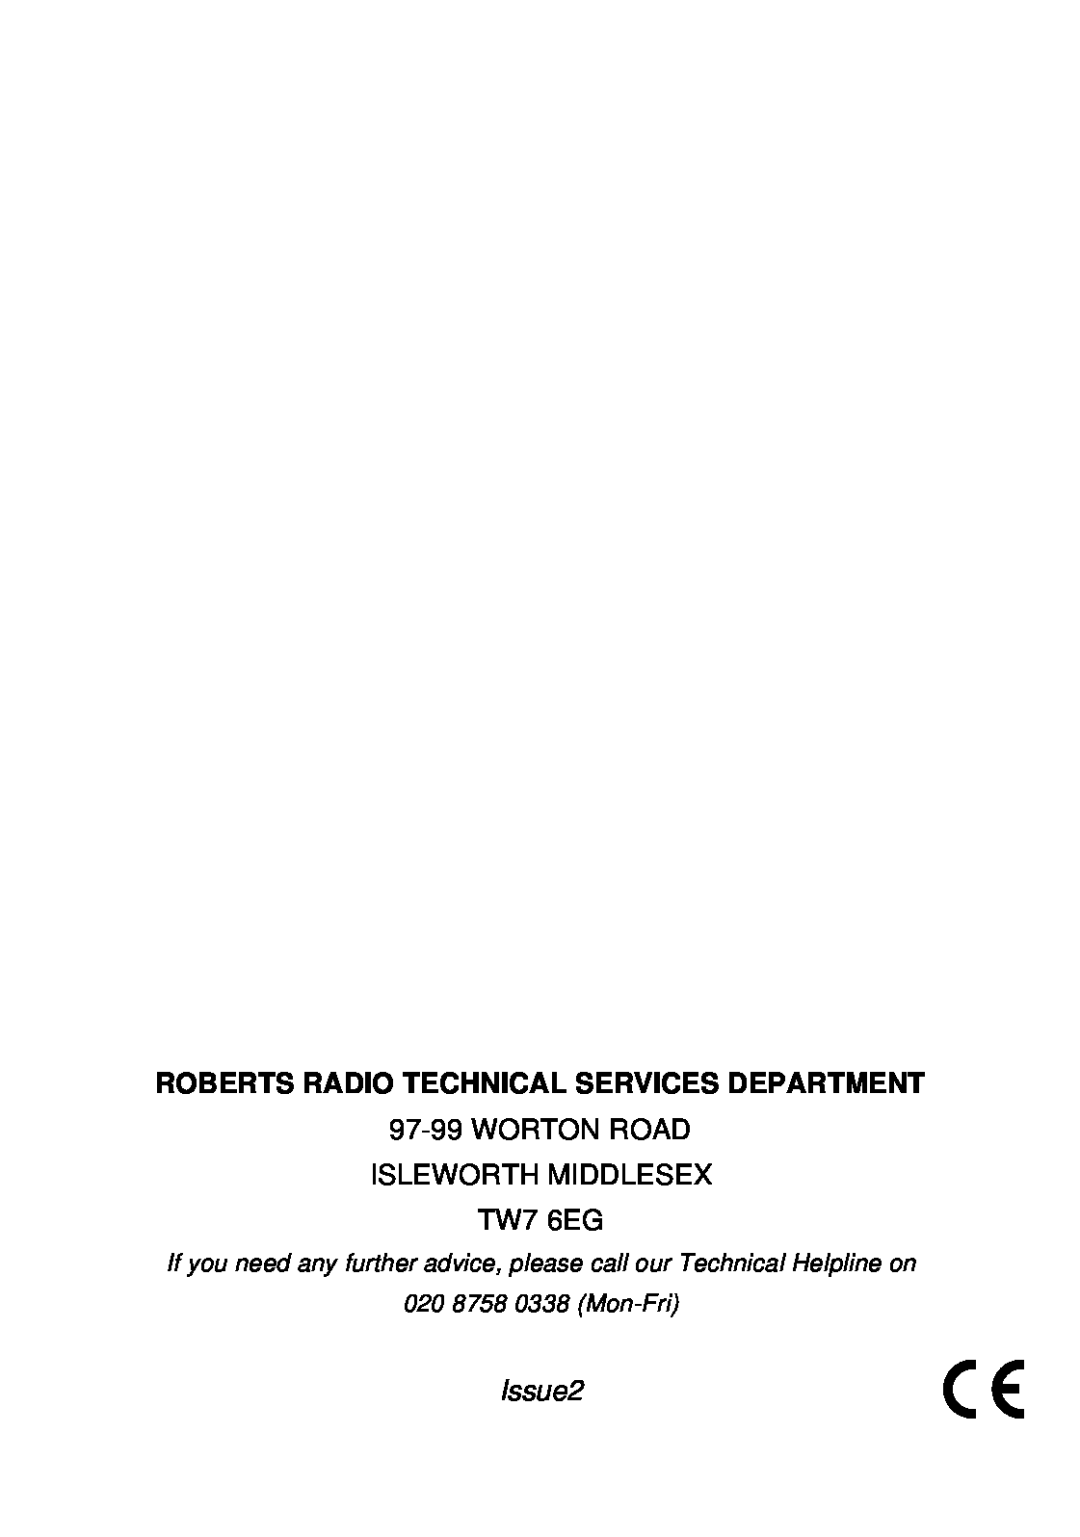 Roberts Radio R984 manual Roberts Radio Technical Services Department, Issue2, 020 8758 0338 Mon-Fri 